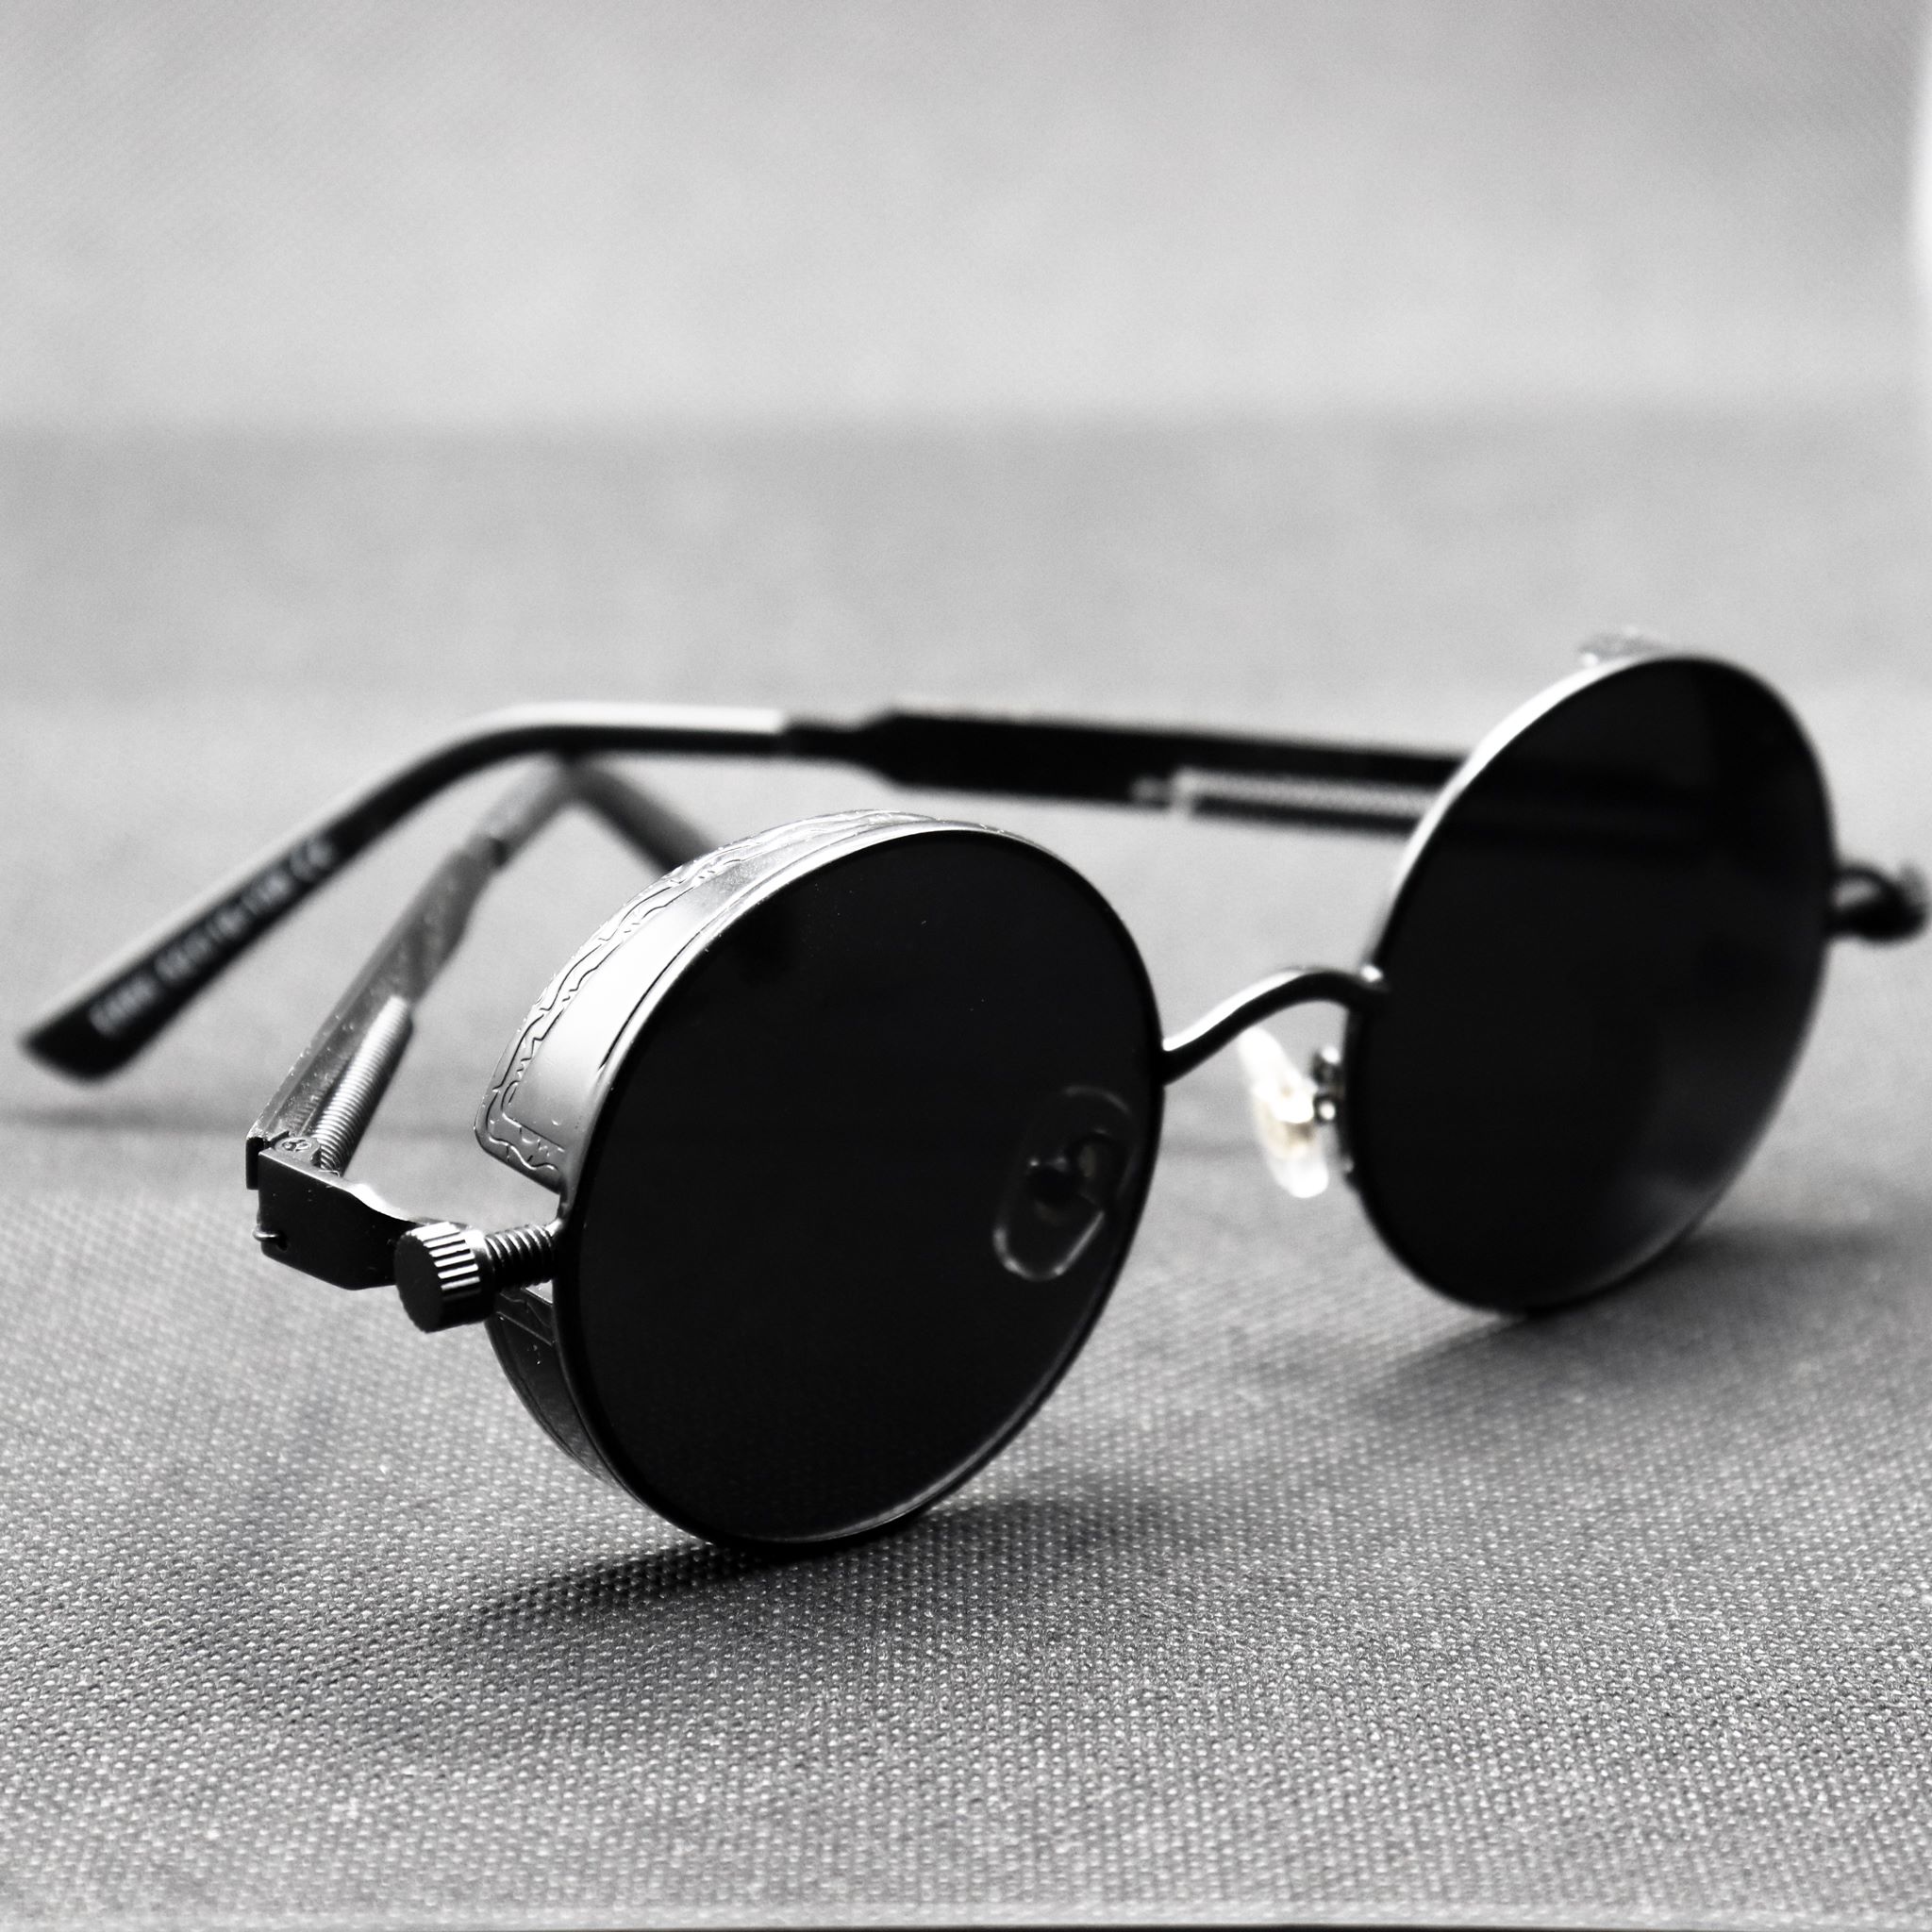 Should I wear suglasses? 3 Benefits of wearing sunglasses